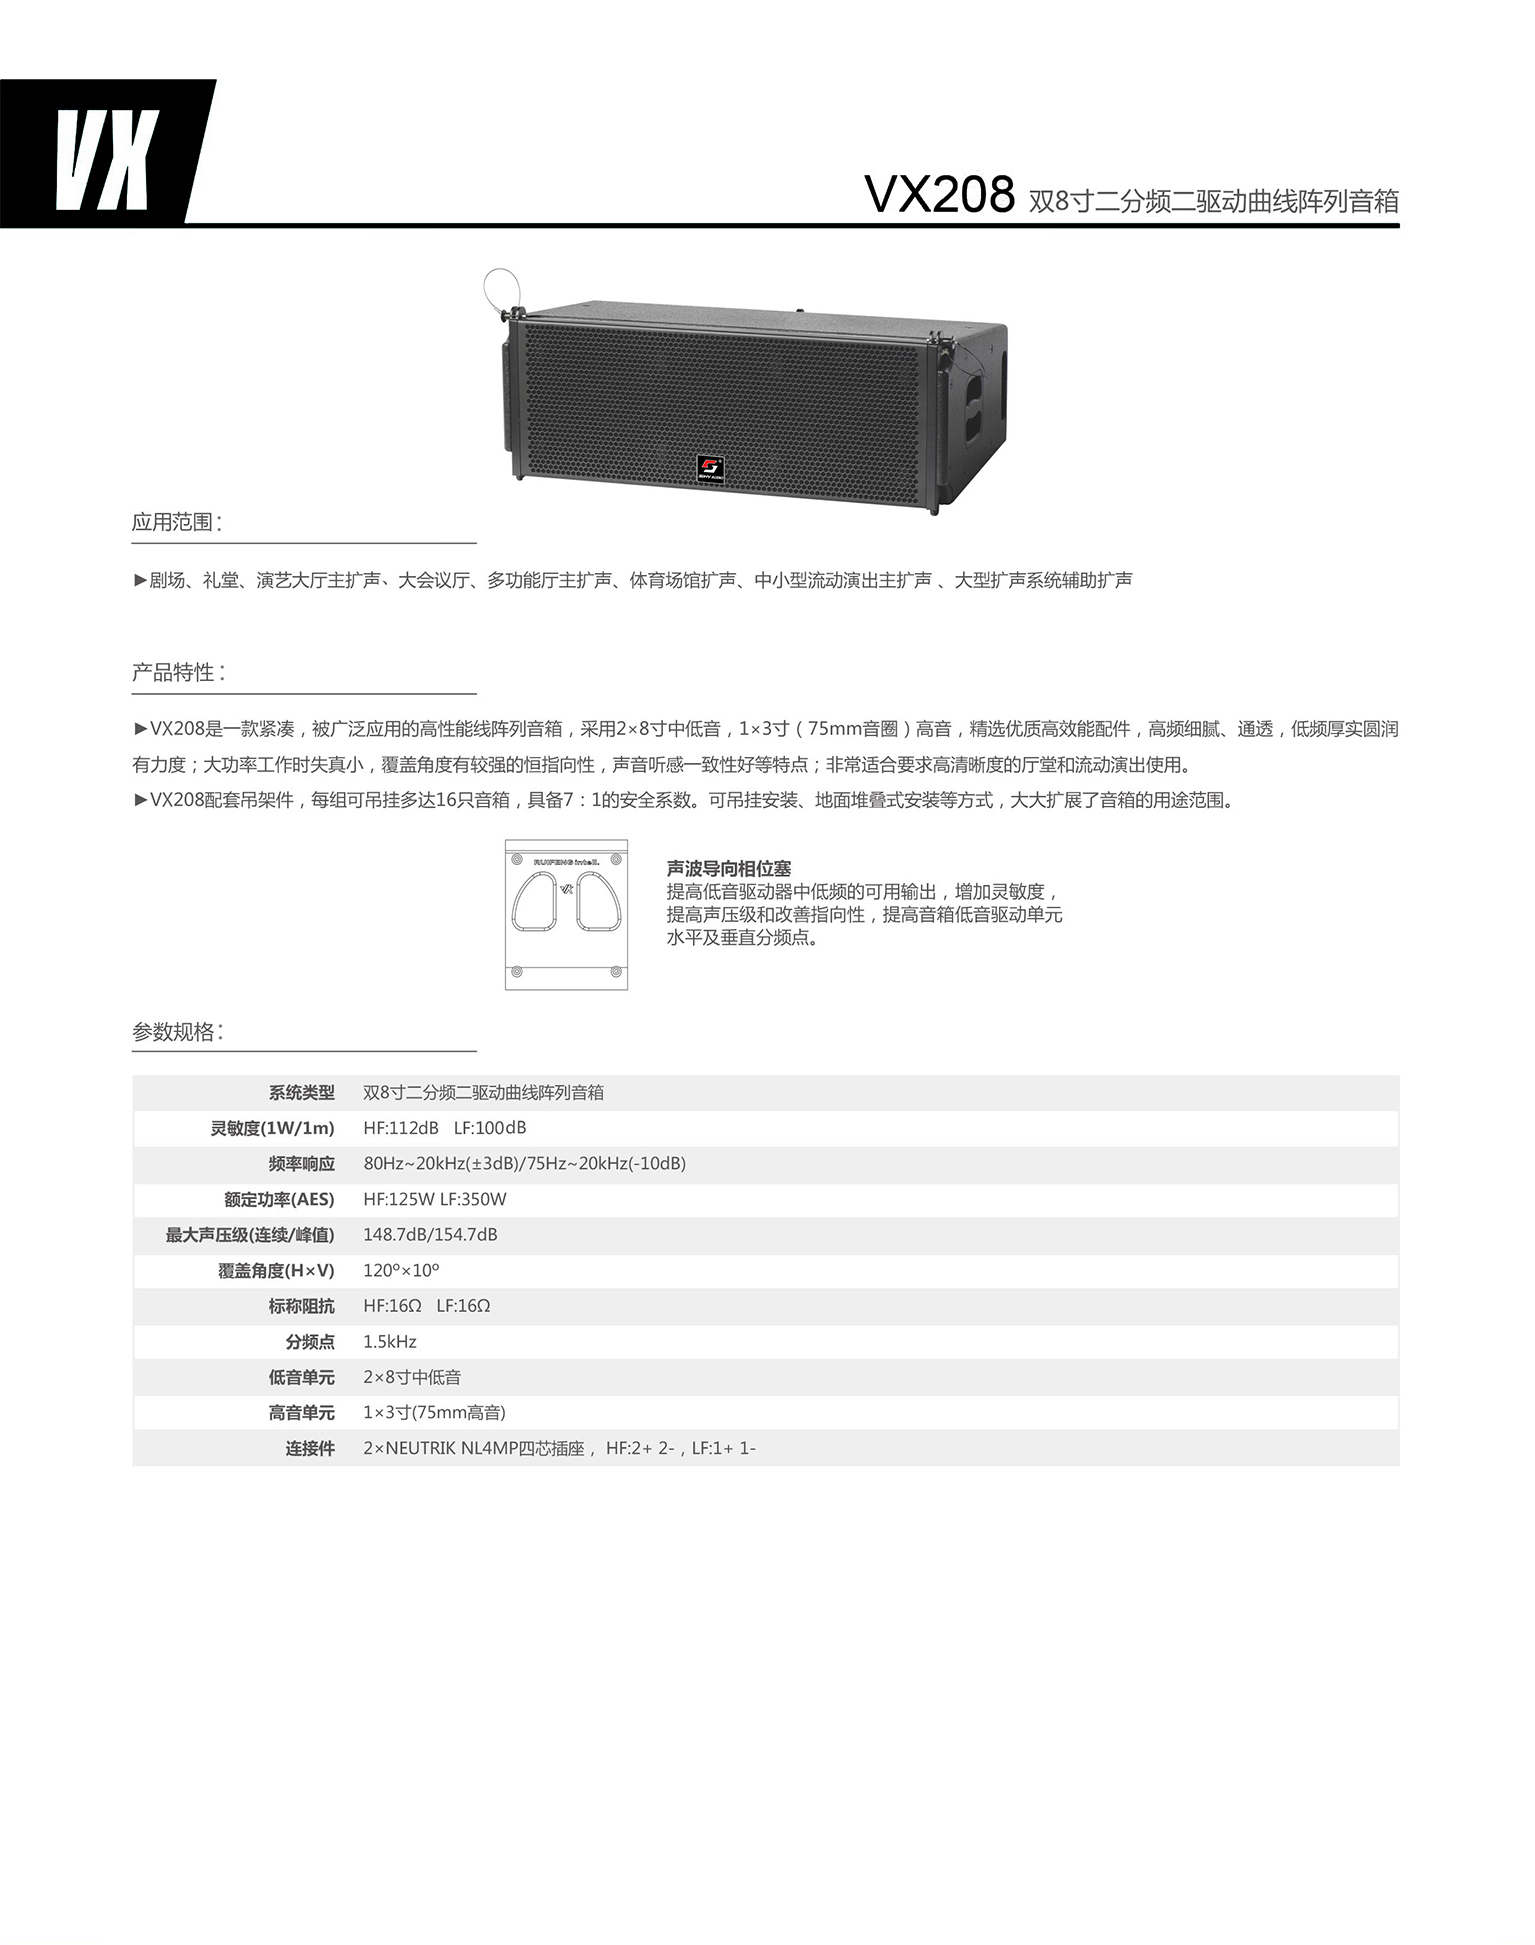 VX208 双8寸二分频二驱动曲线阵列音箱.jpg